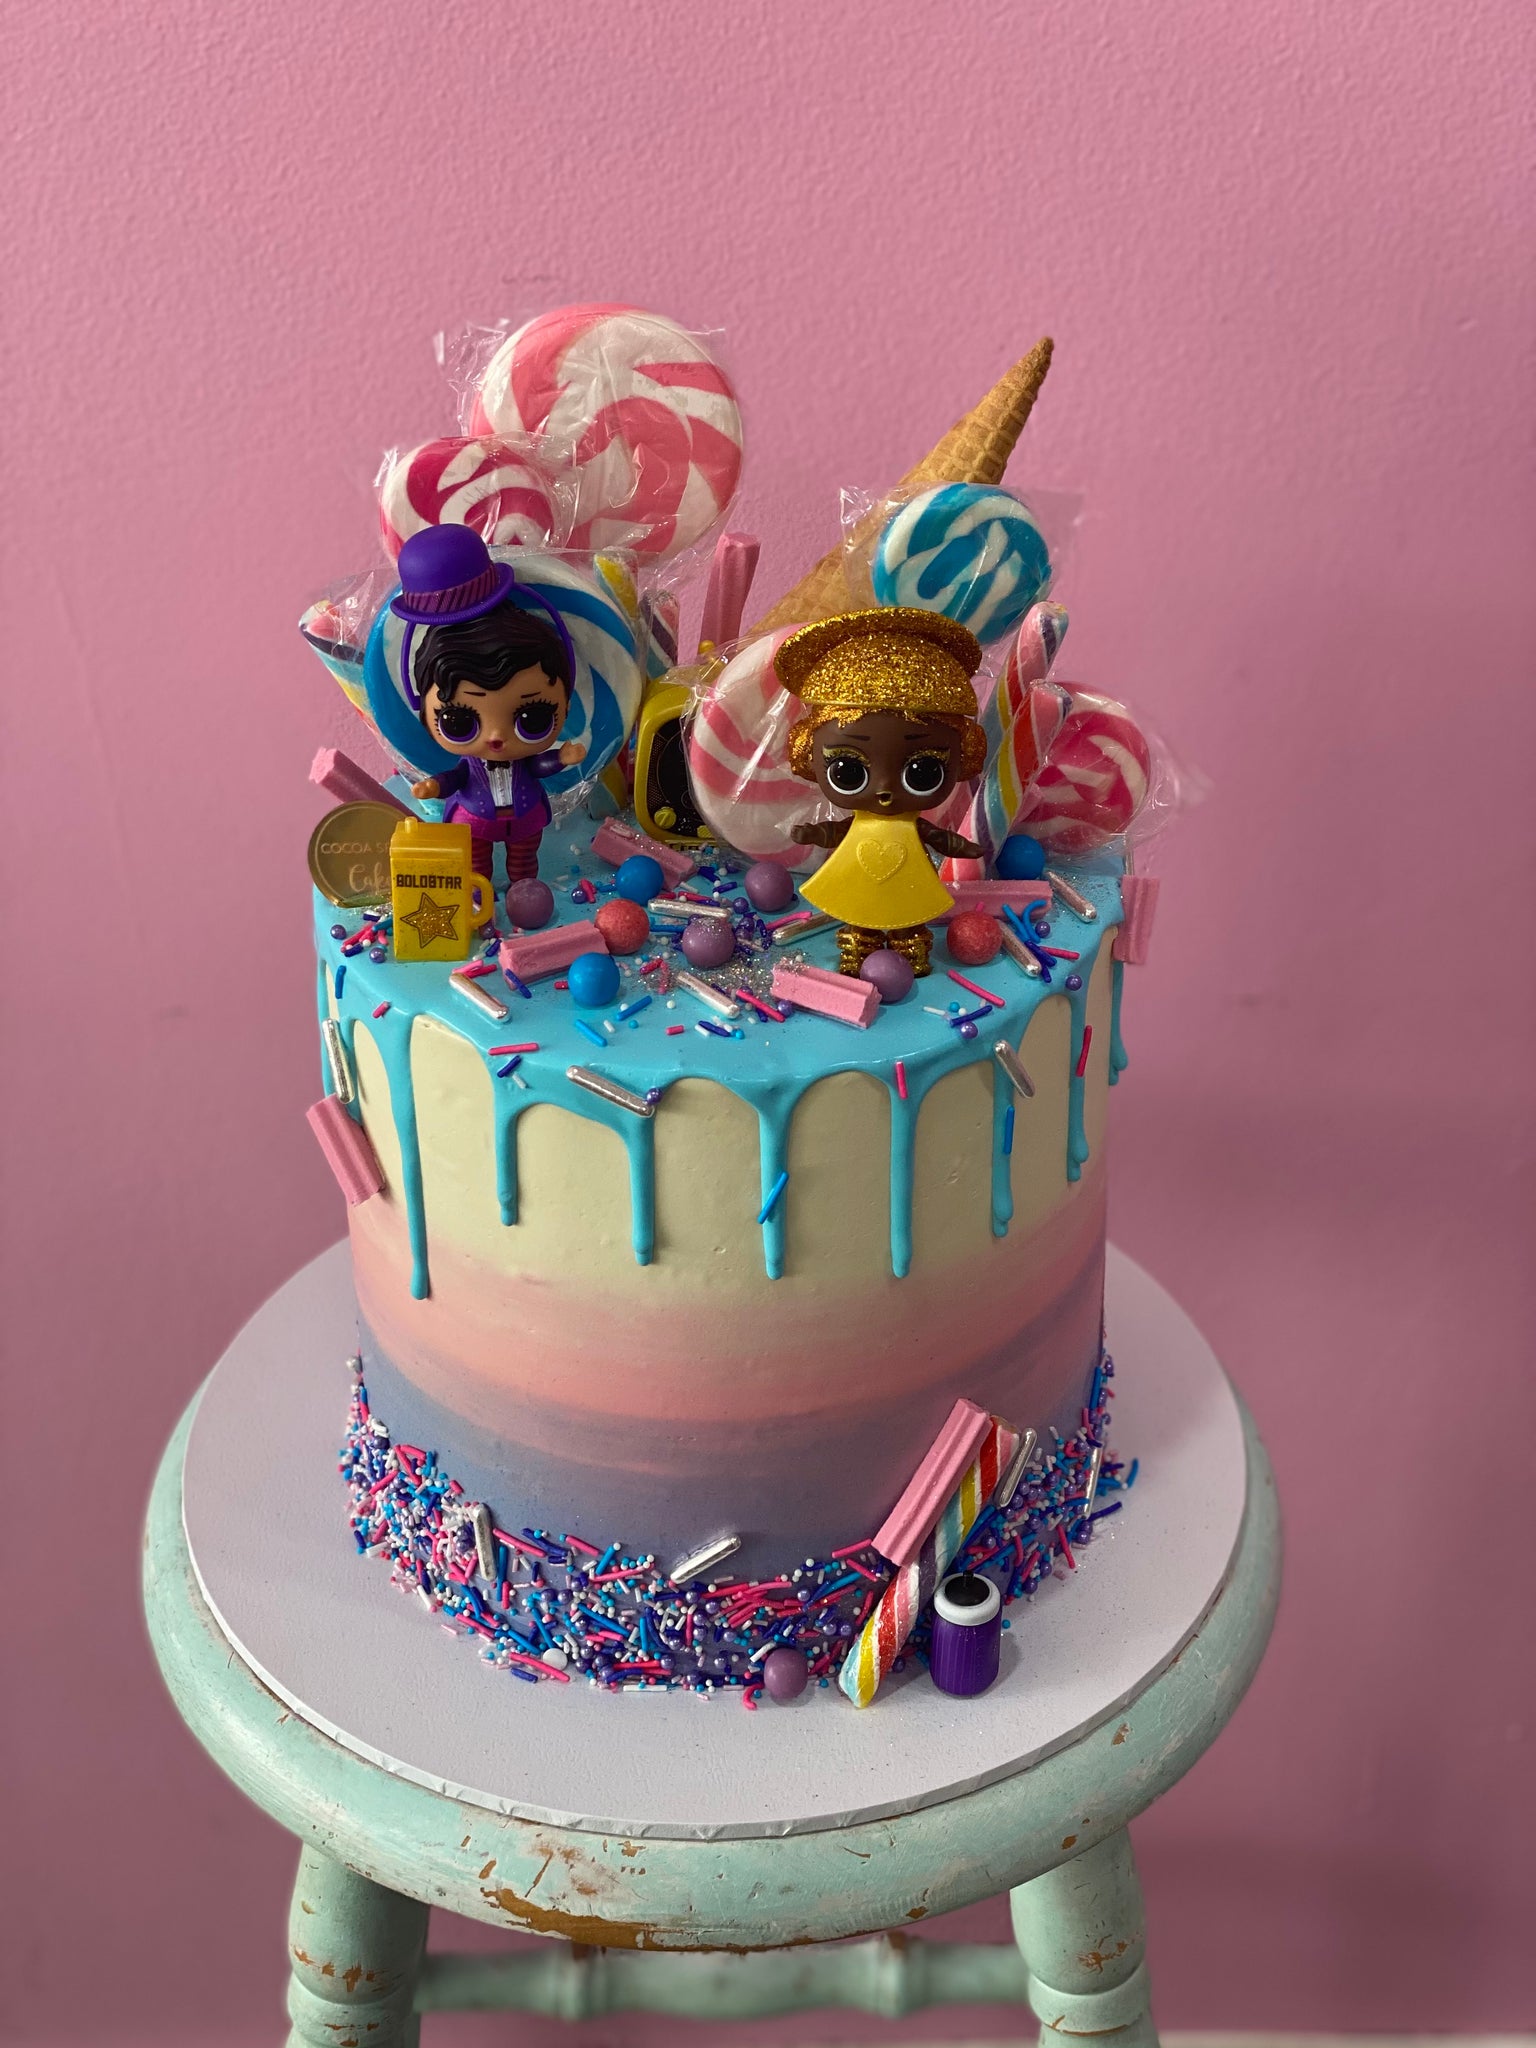 Lol Doll Cake 1 - dreamydelightsbysidra.com